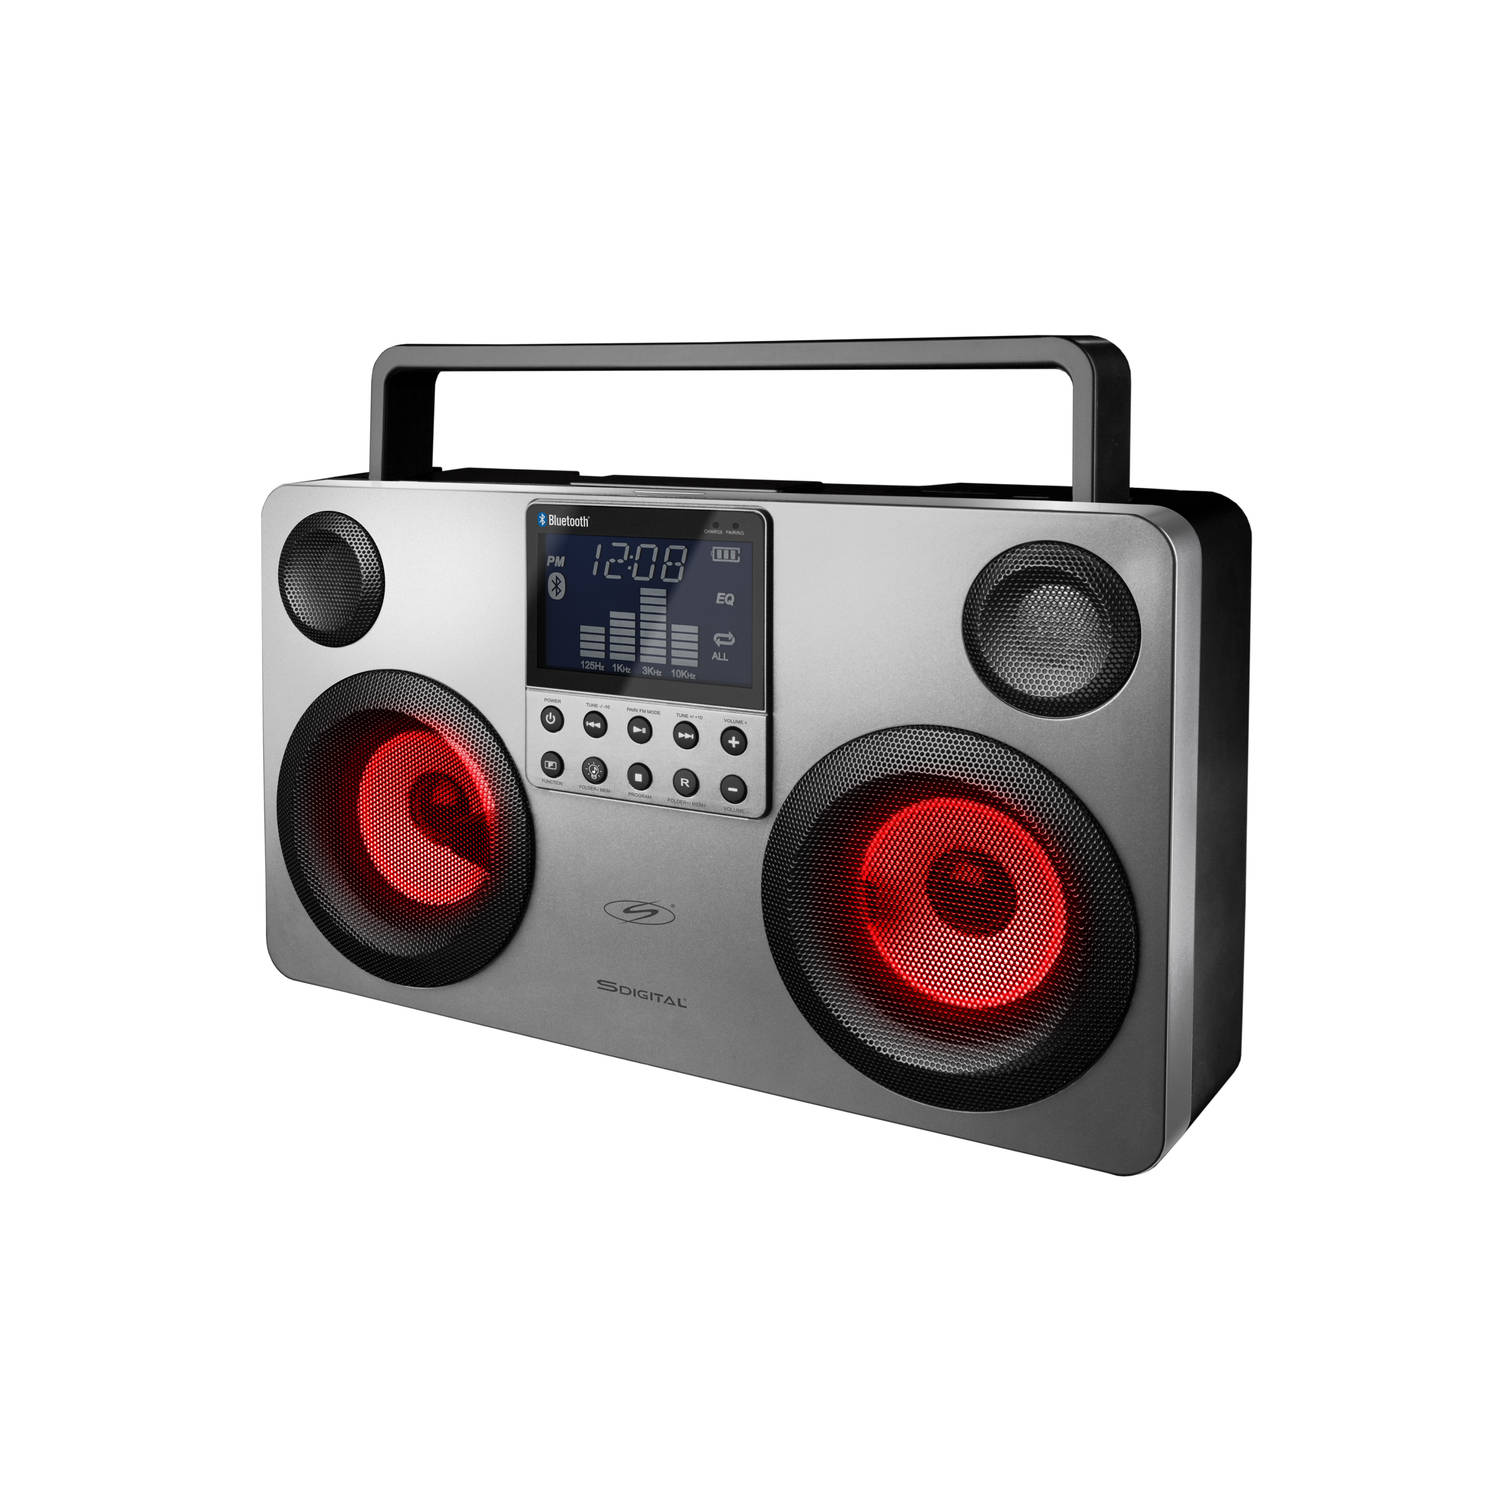 S-Digital Bluetooth speaker